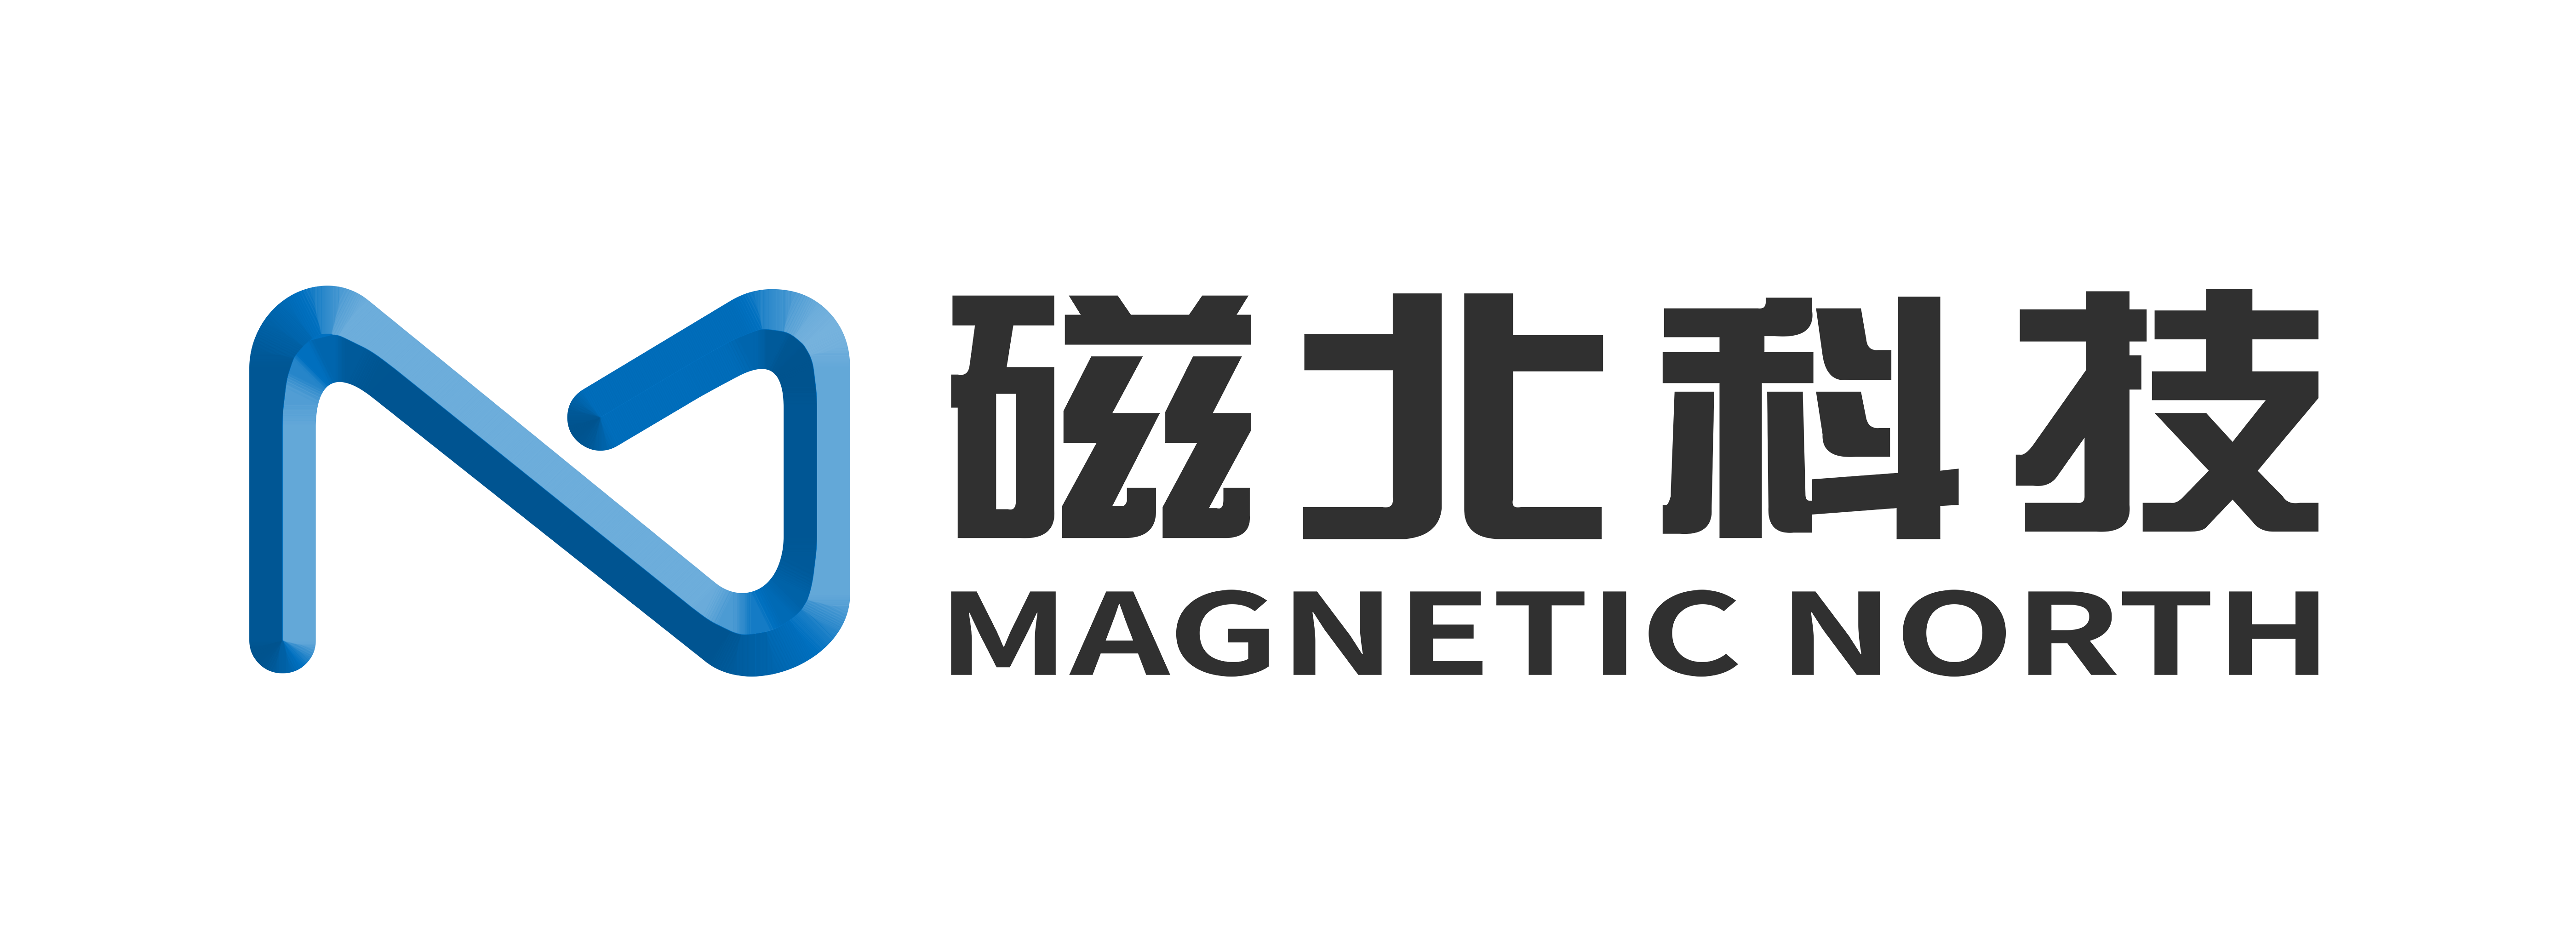 Xiamen Magnetic North Technology logo